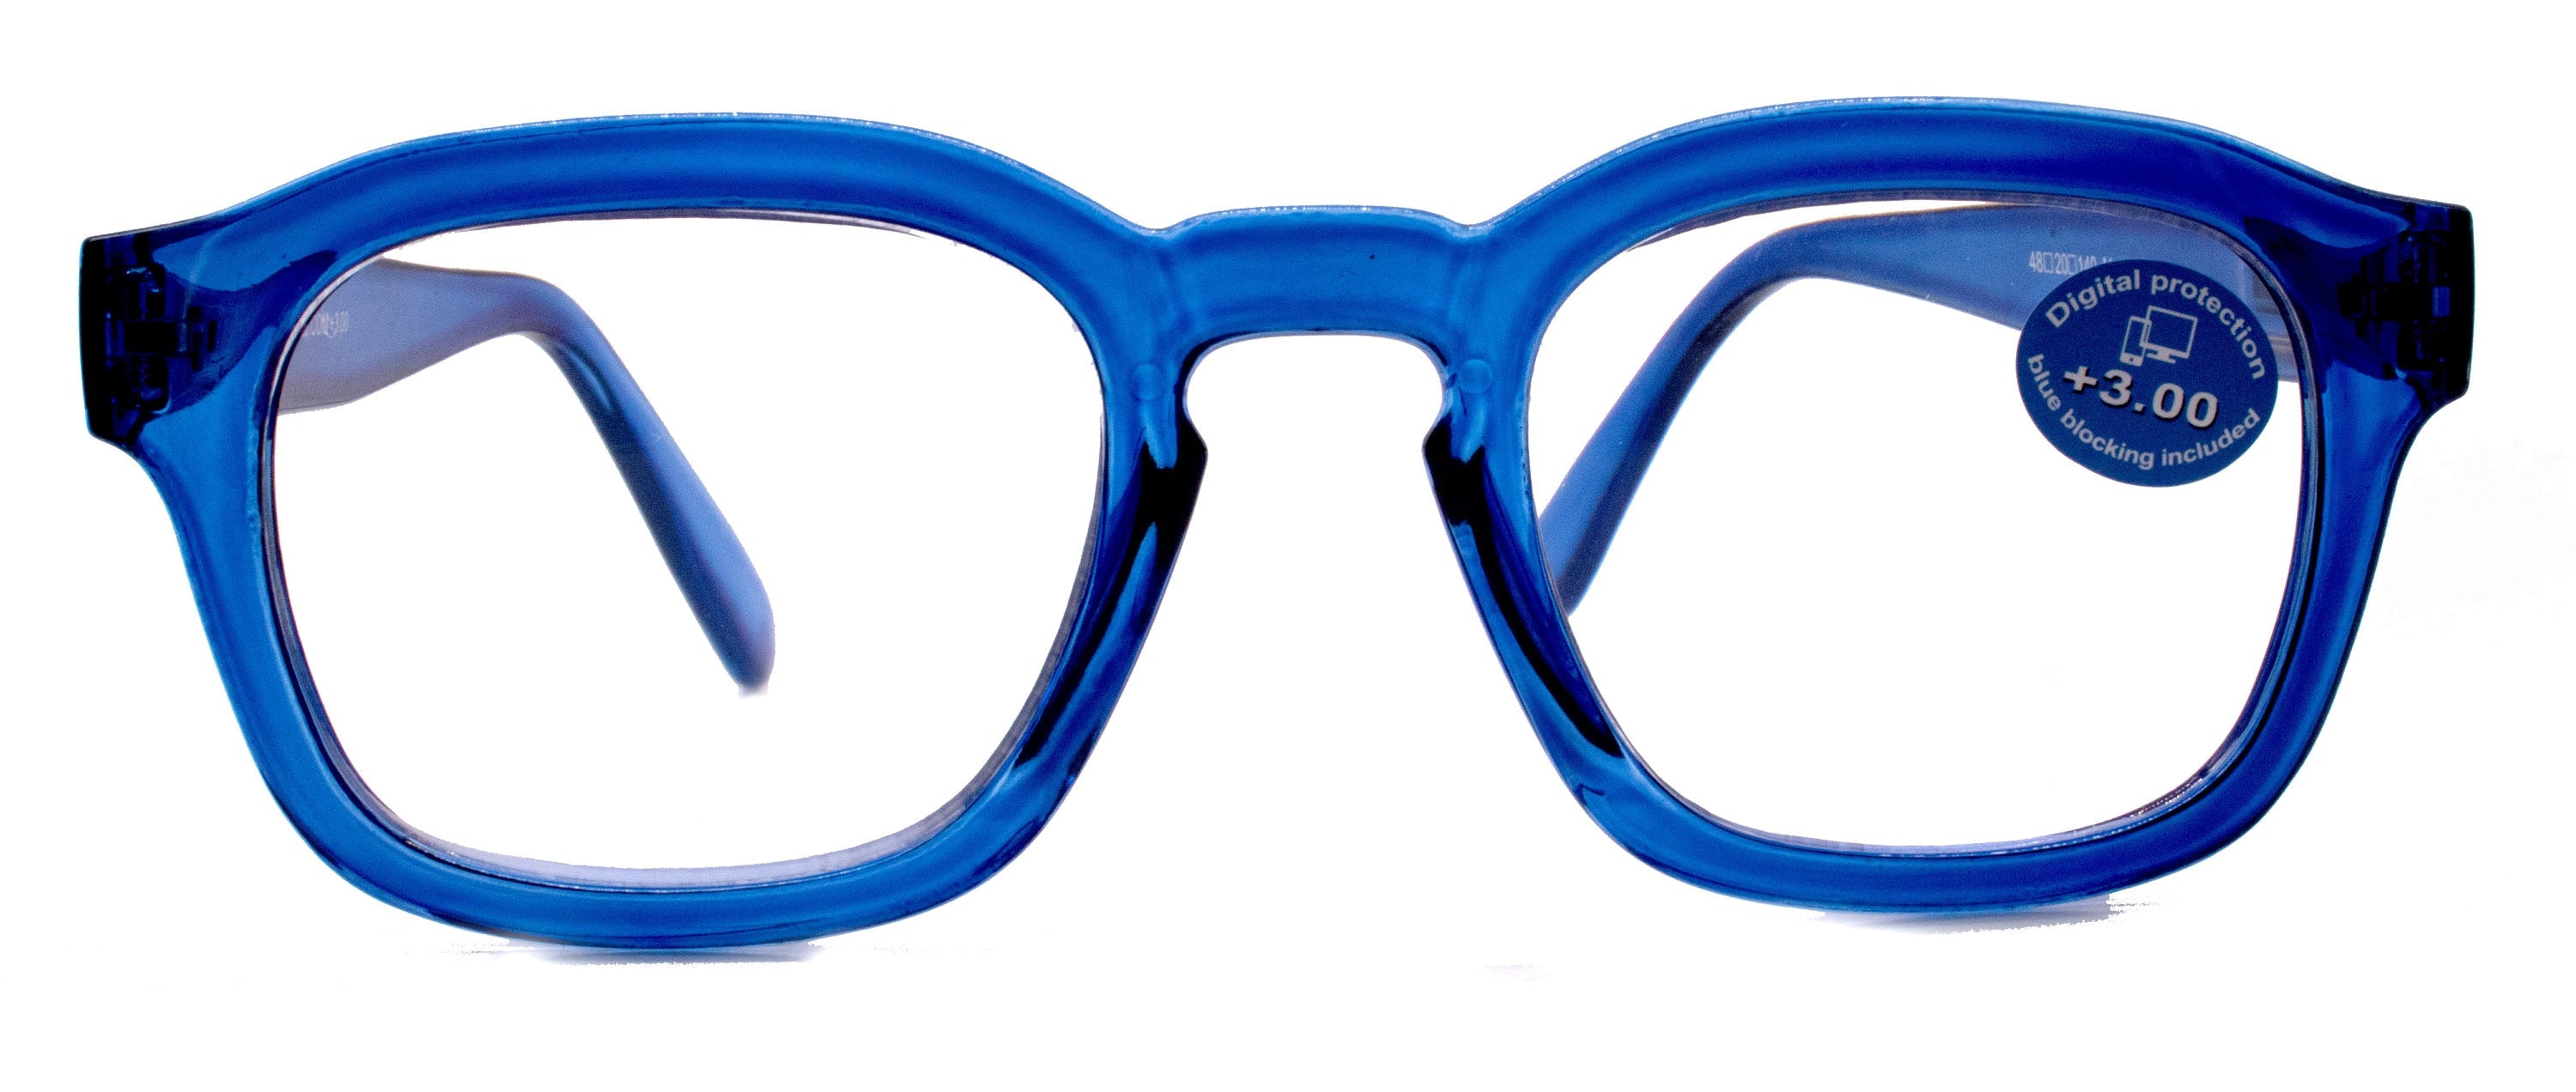 Apollo, (Blue Light Glasses) (Blue Blocker) Reduce Eyestrain, A/R Anti glare. +1.25..+3.00 Large Square (Clear) NY Fifth Avenue.-MERCP20572CL_175